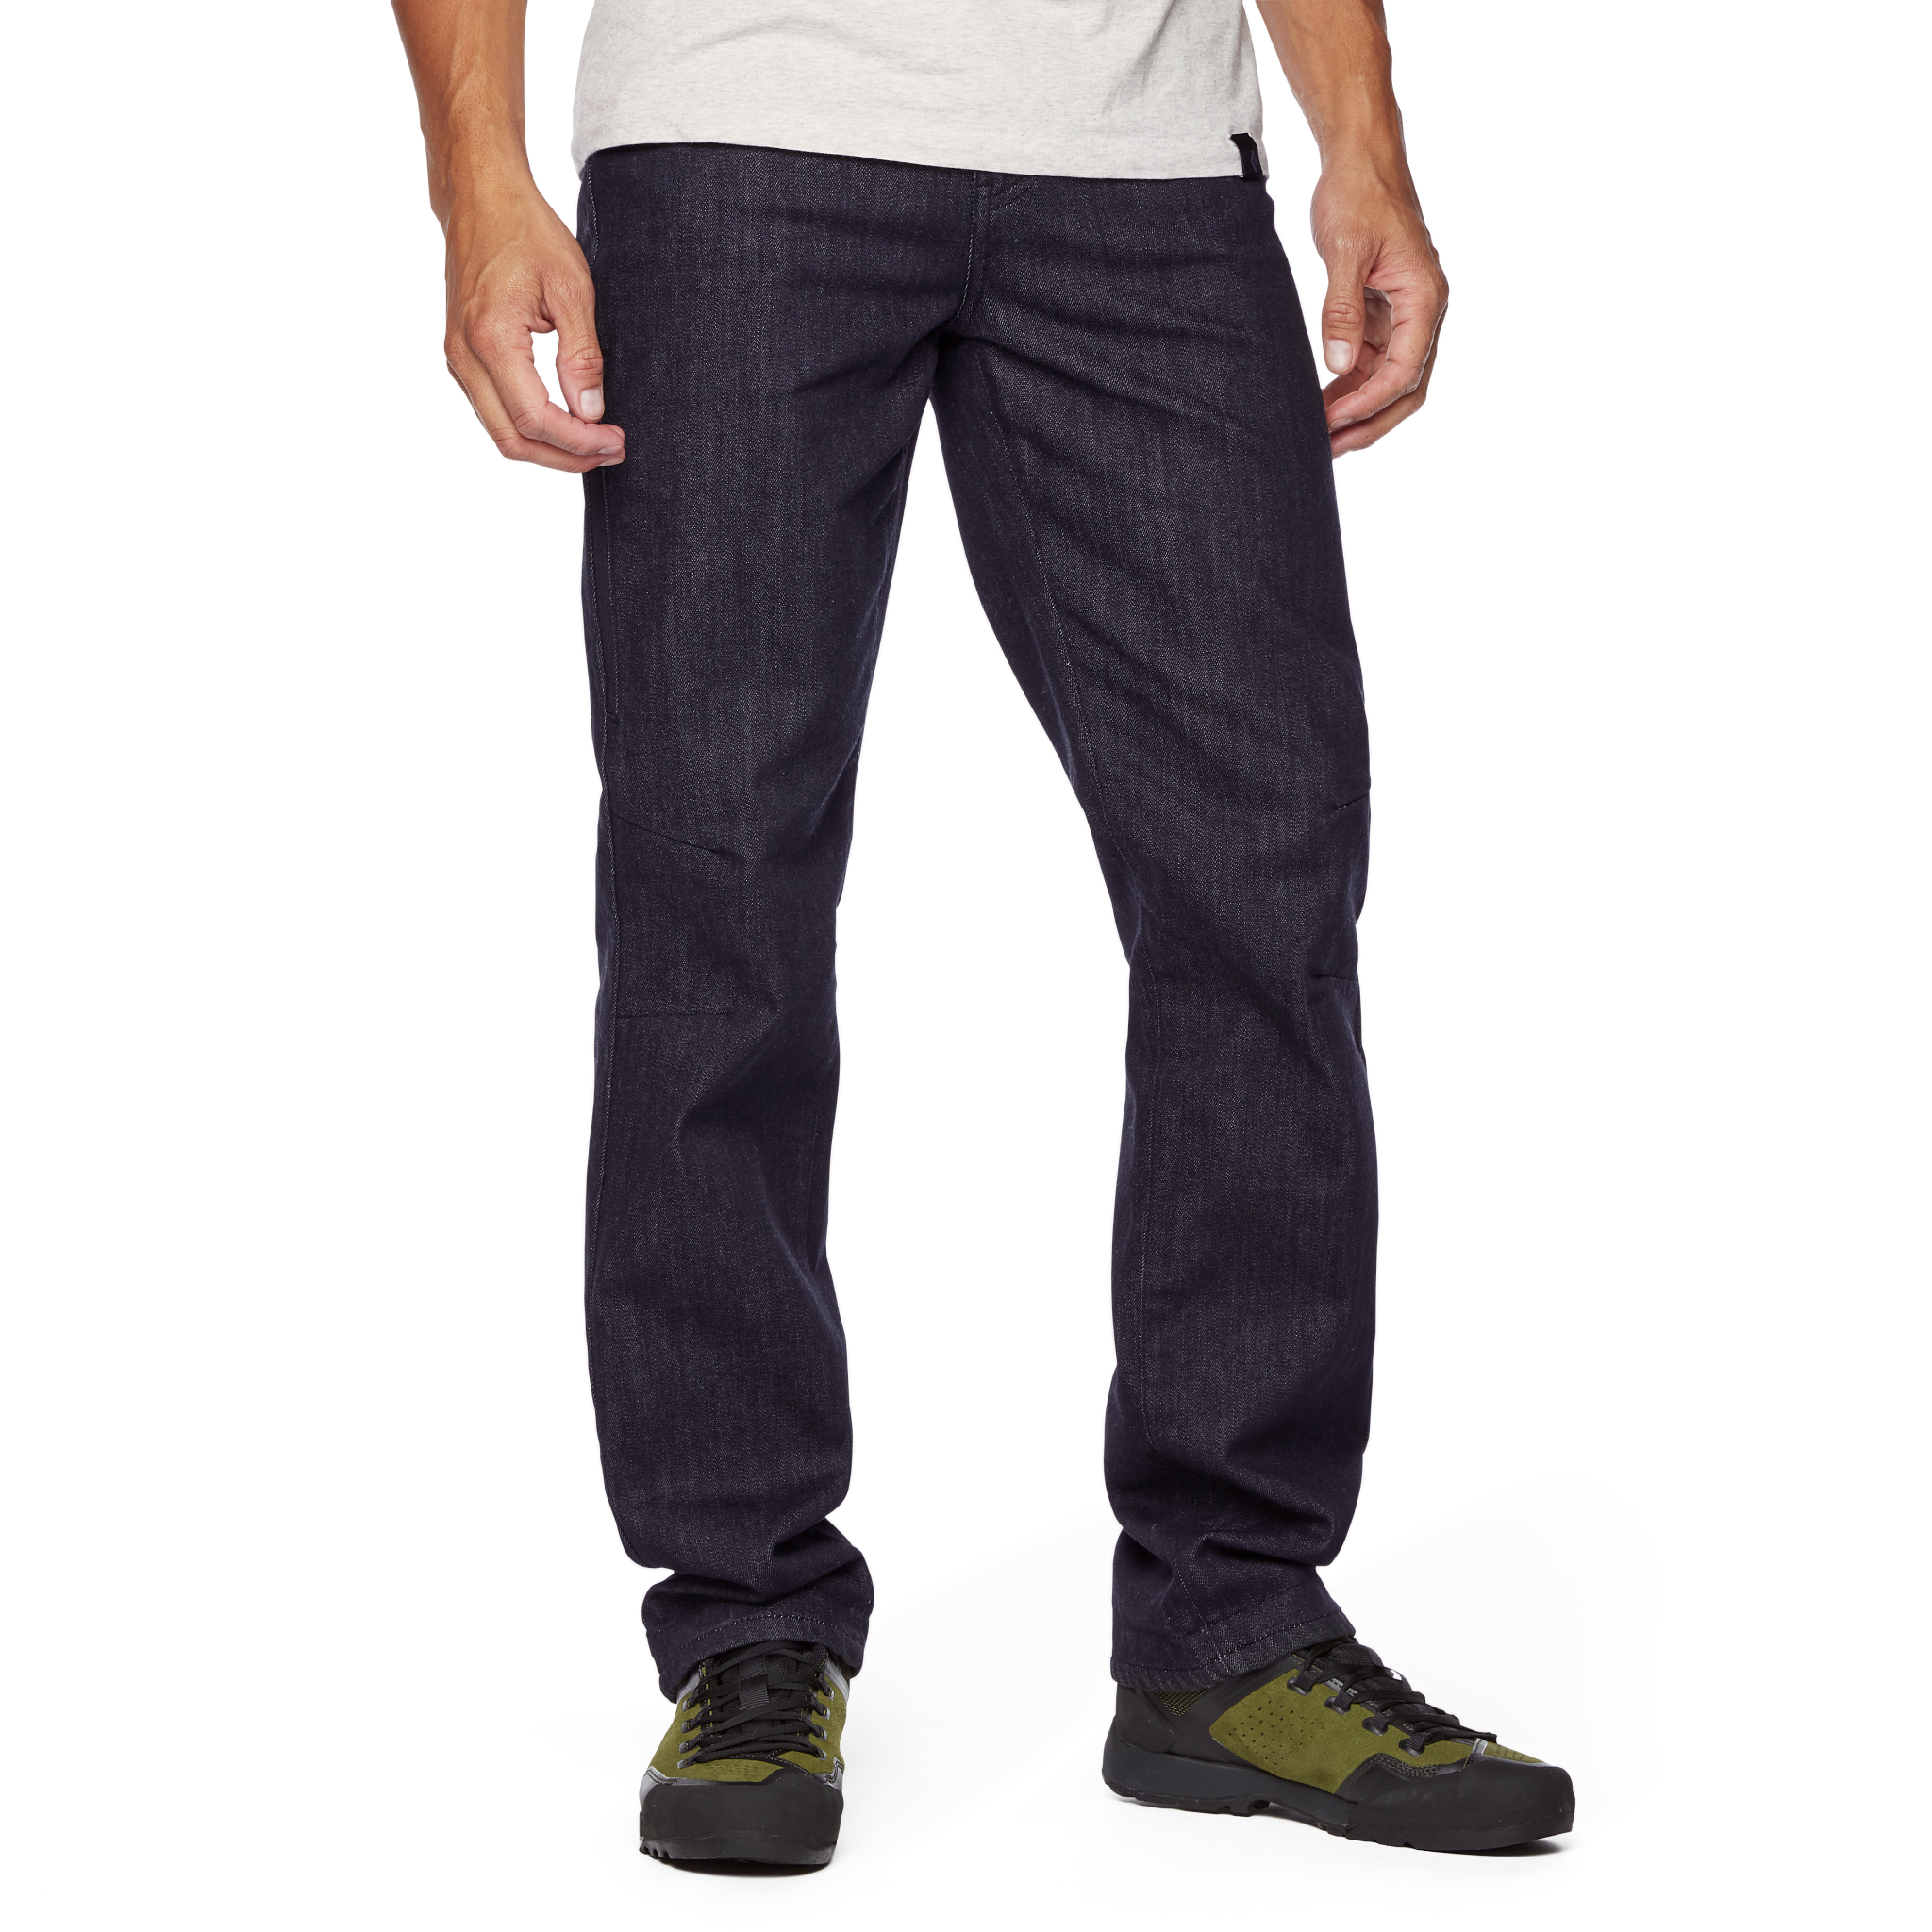 Black Diamond Equipment Men's Mission Wool Denim Pants Size 31, in Dark Grey